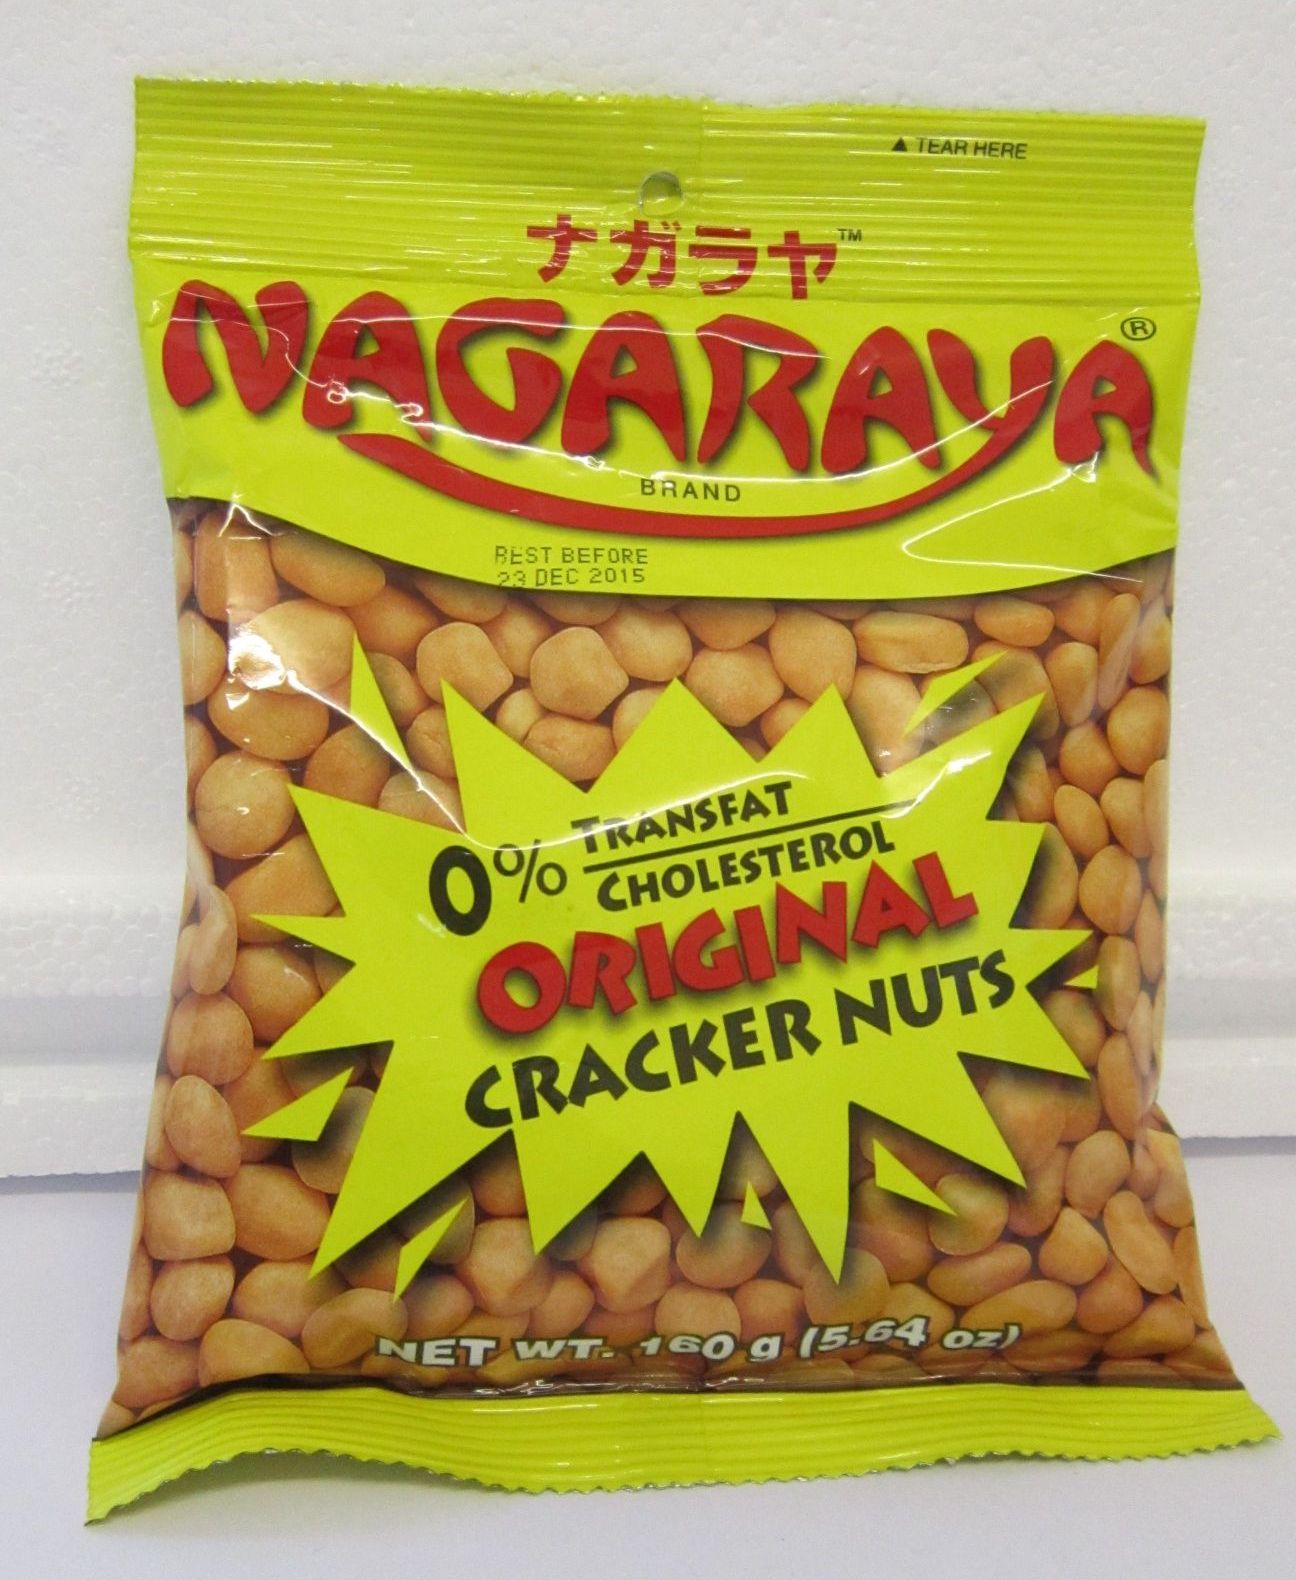 Nagaraya Original Cracker Nuts Image